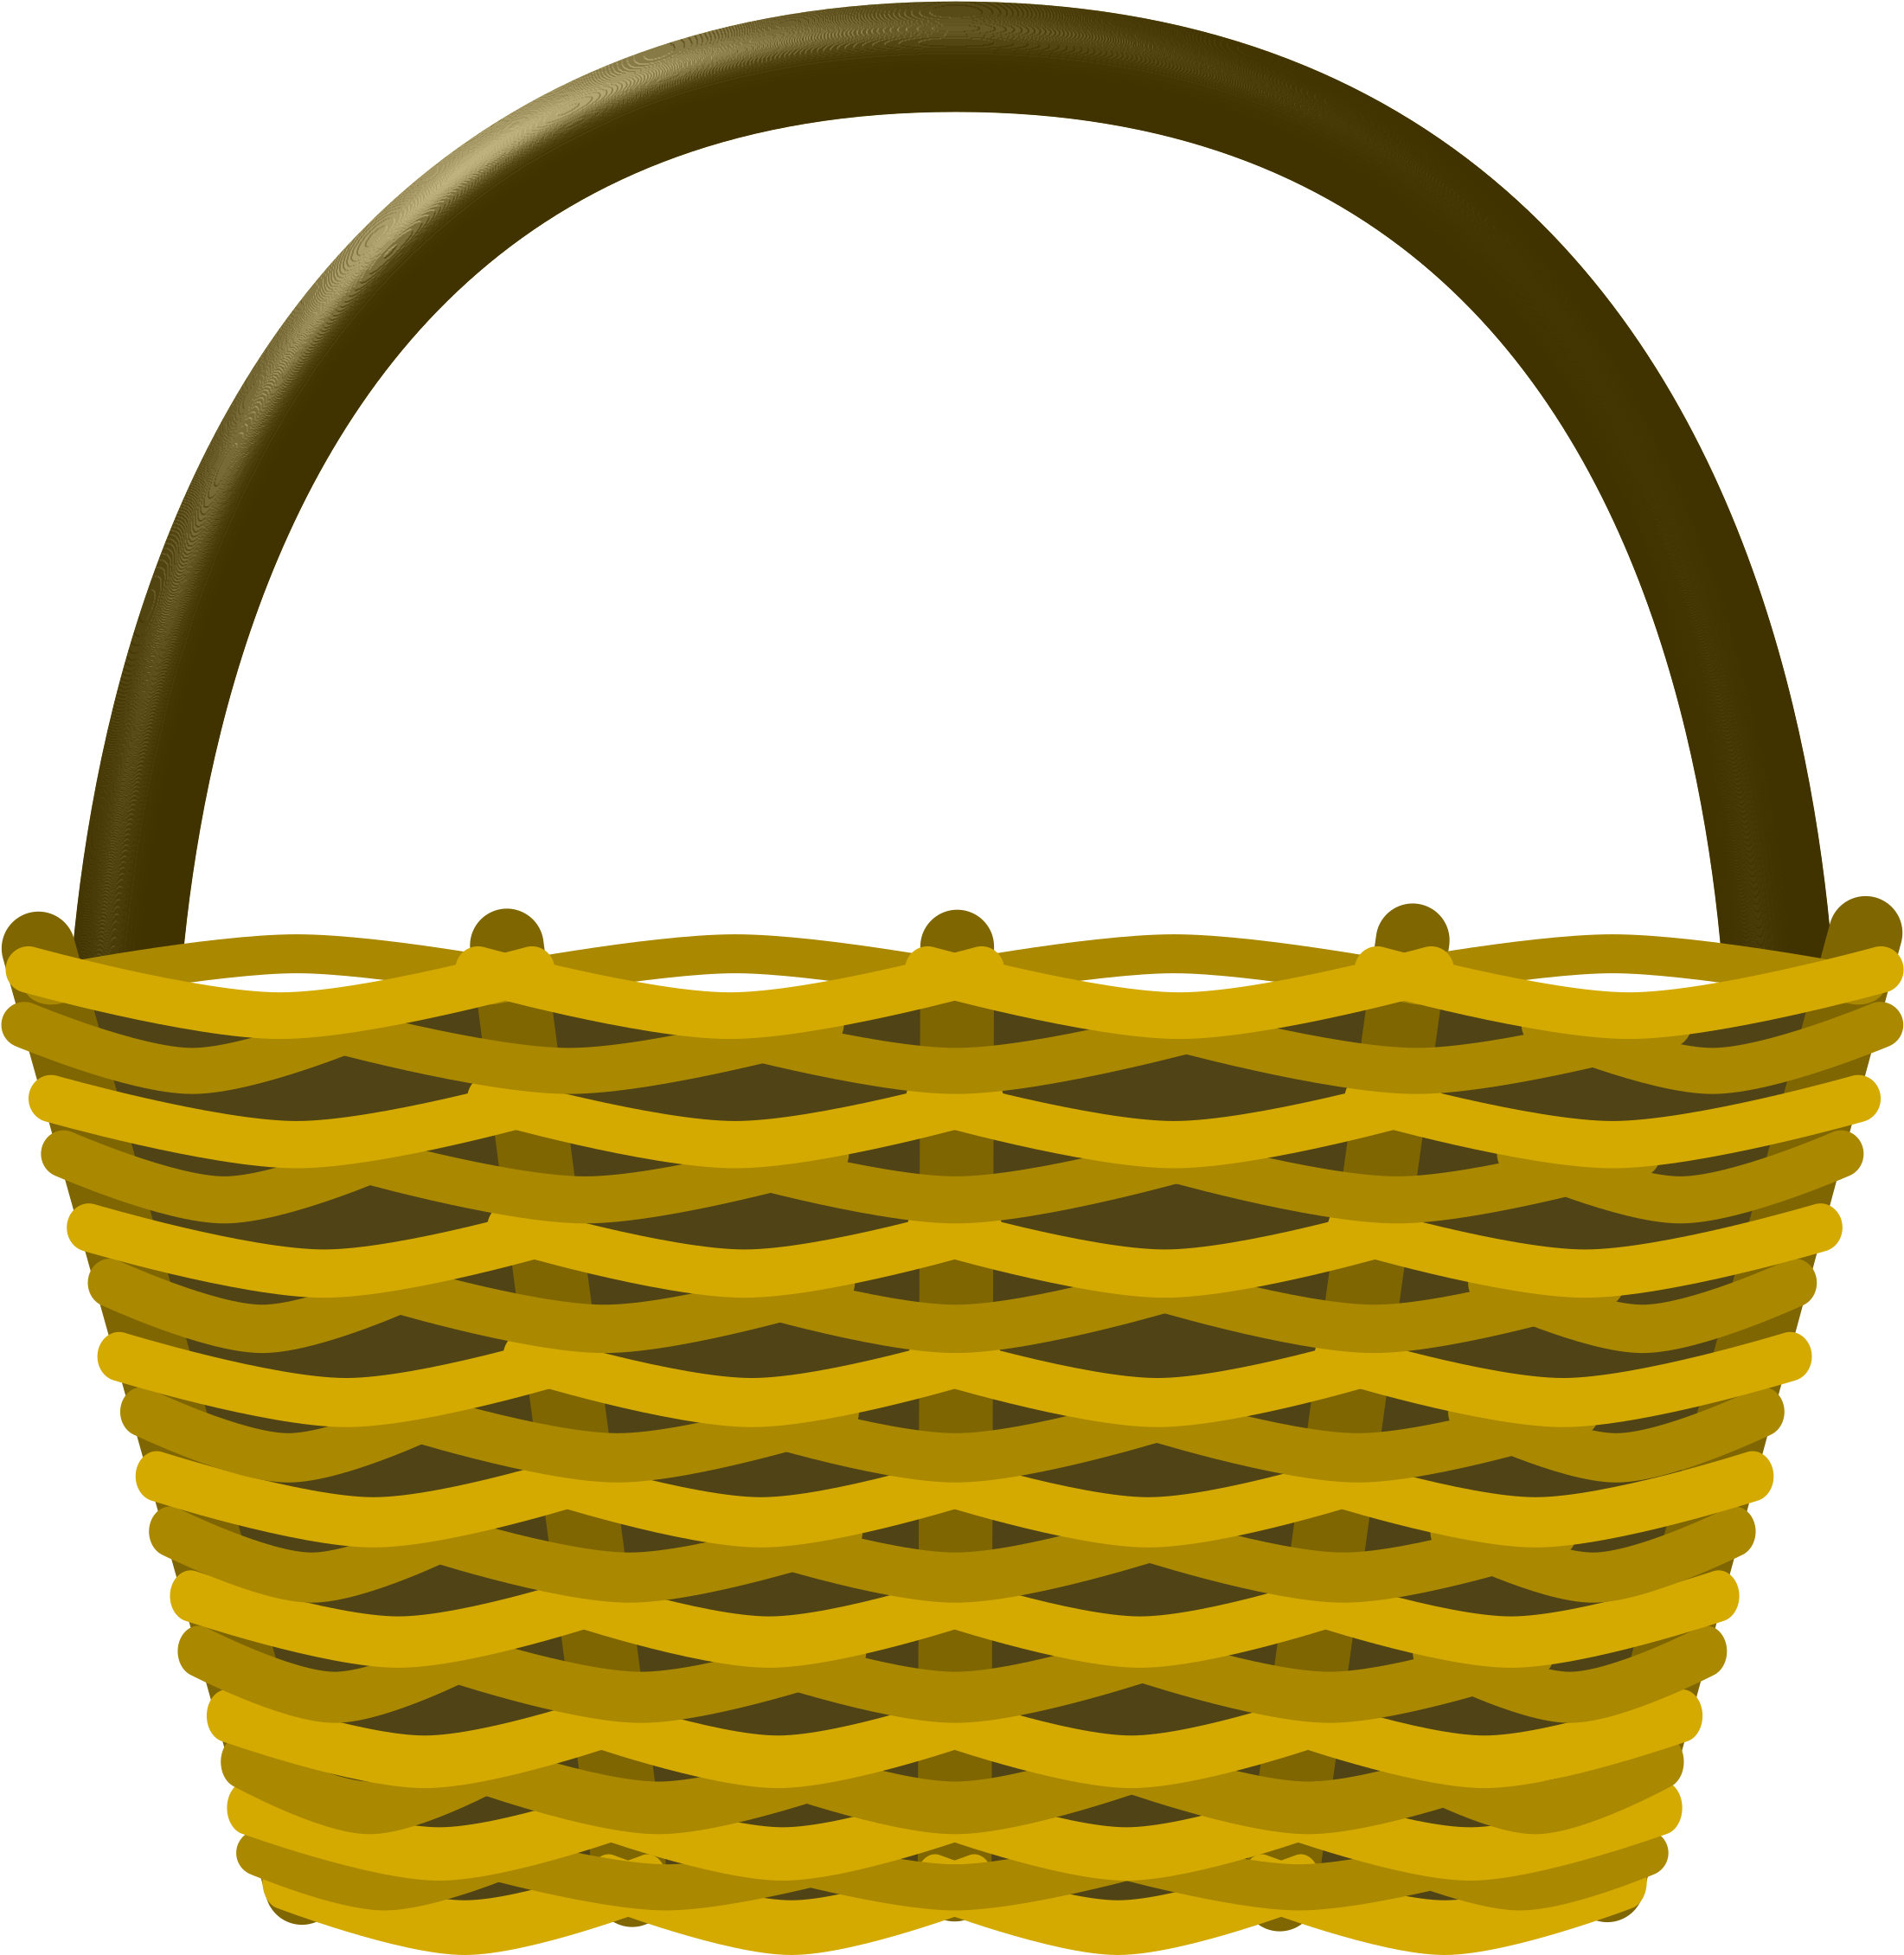 Basket Clipart Tumundografico - Hot Air Balloon Basket Clip Art.